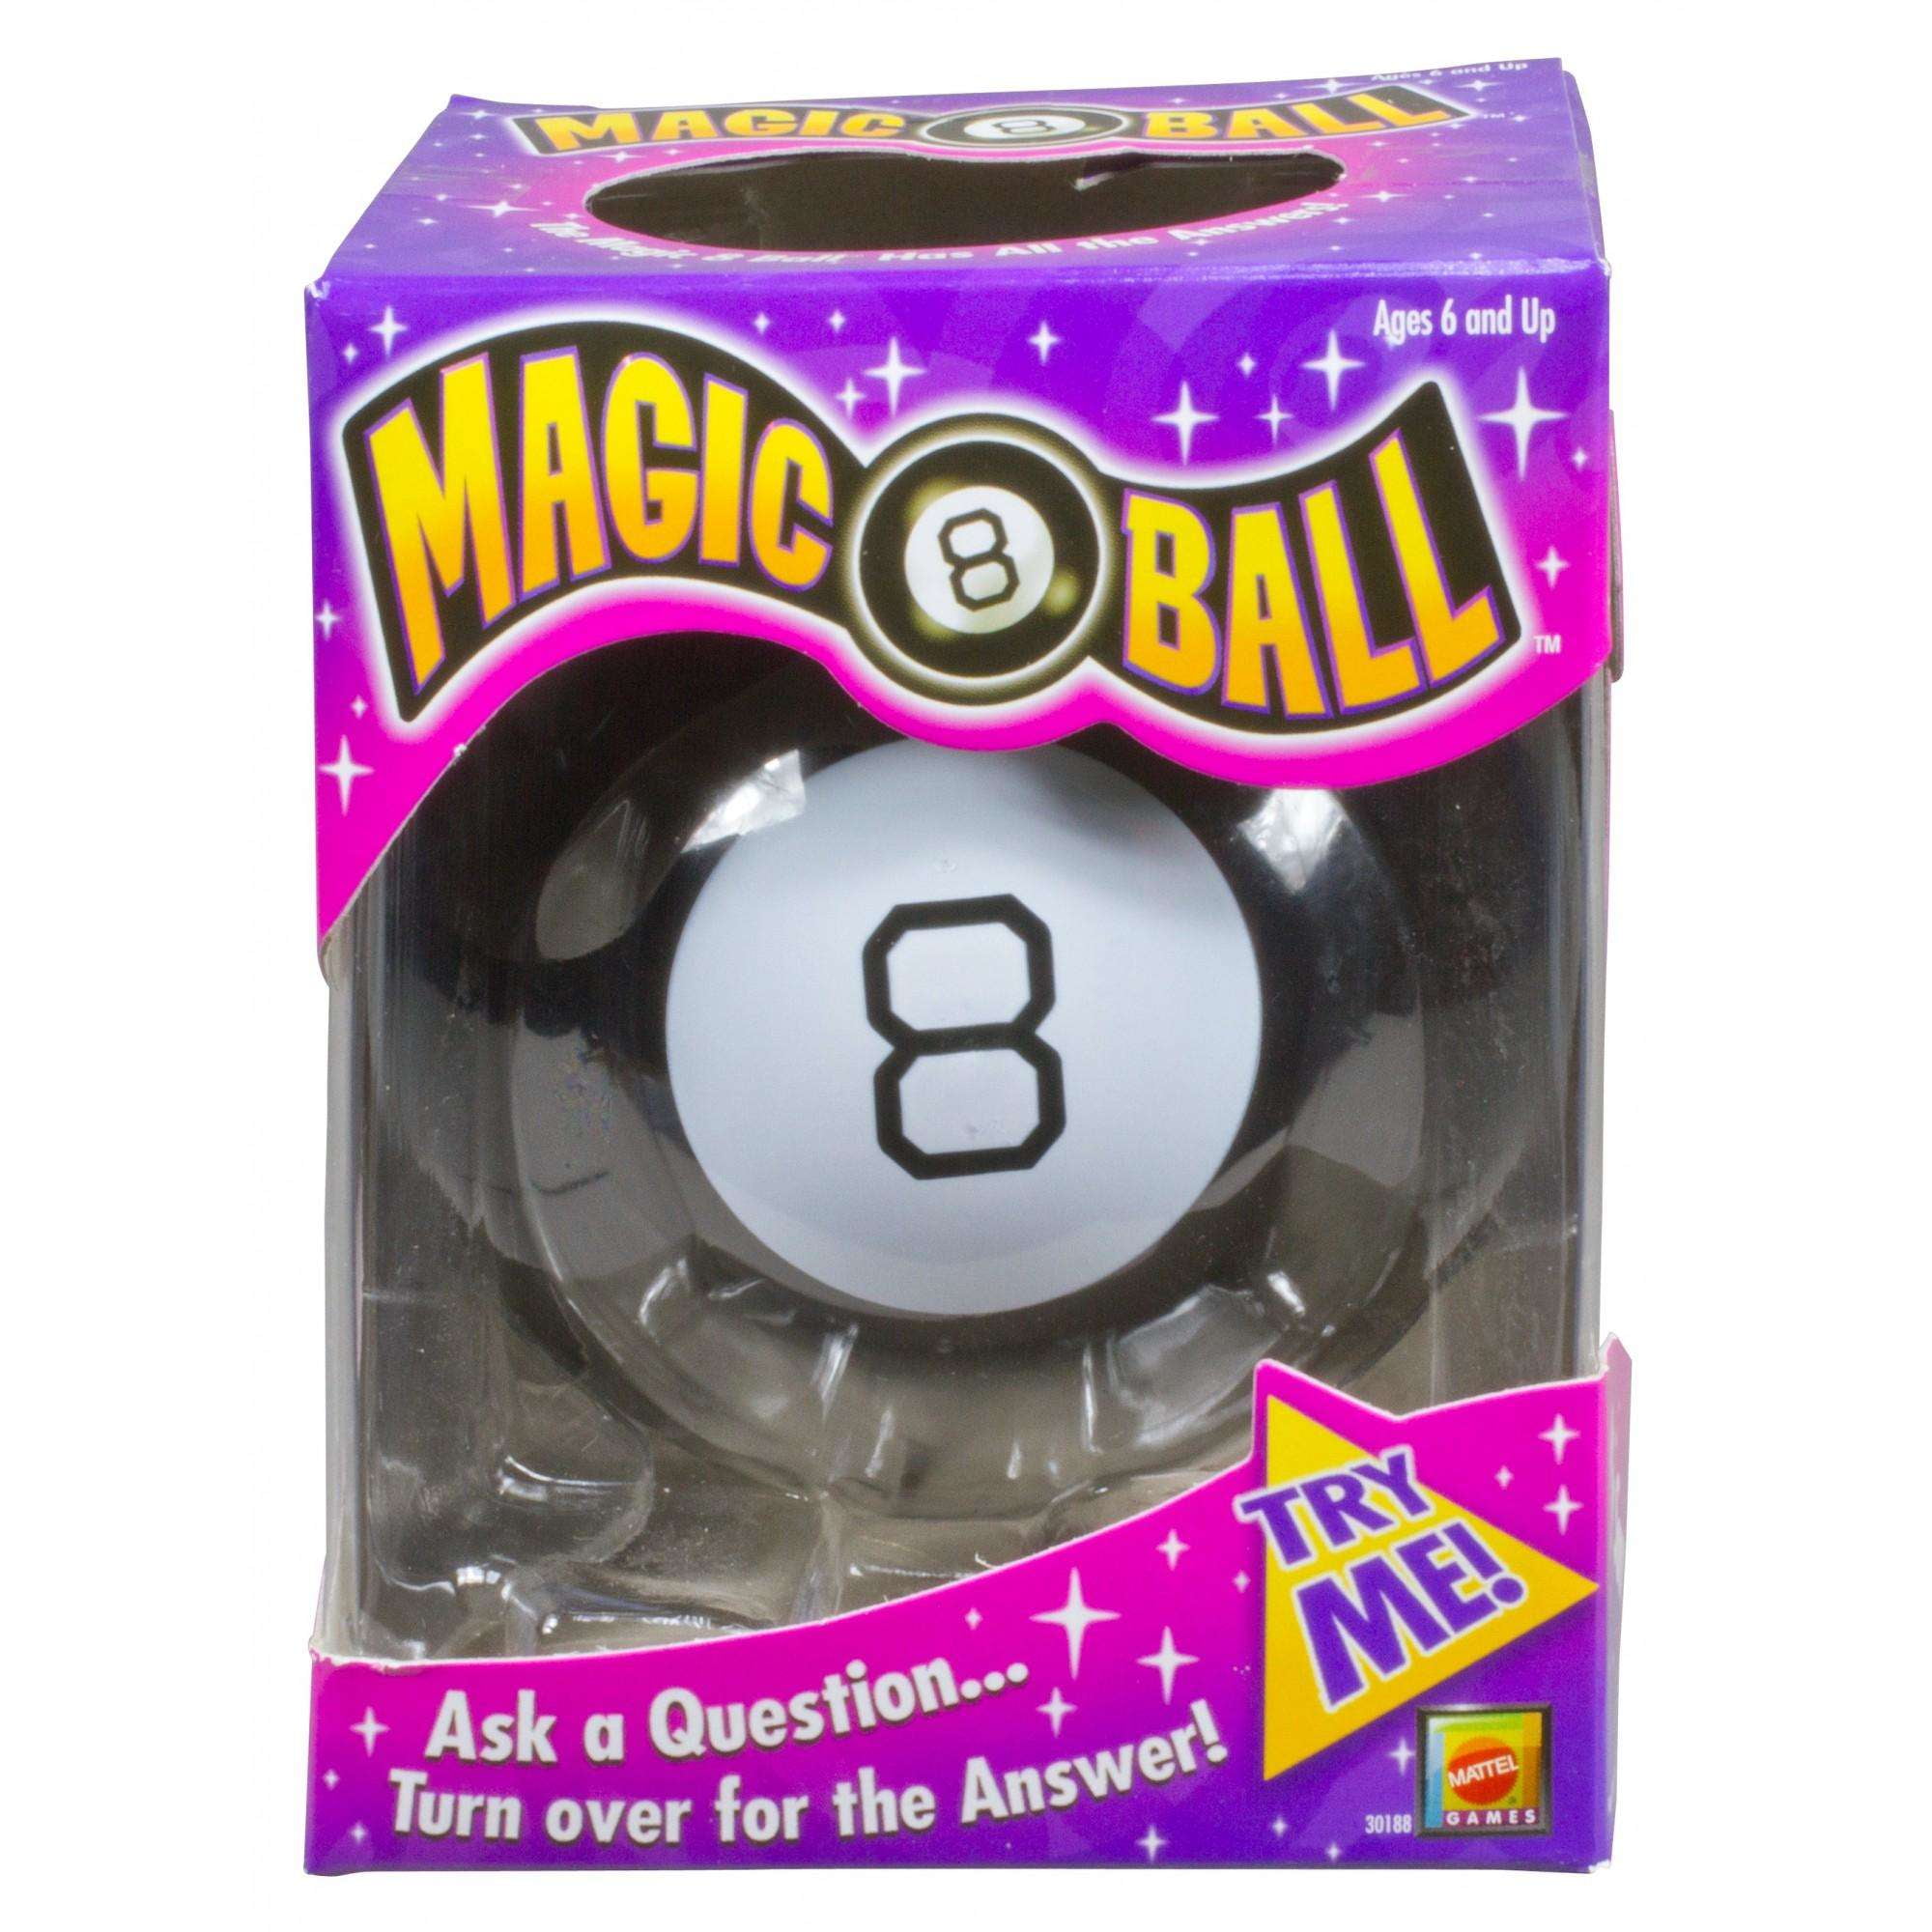 Mattel The Original Magic 8 Ball Fortune Teller Kids Fun Game Toy Gift new hot 